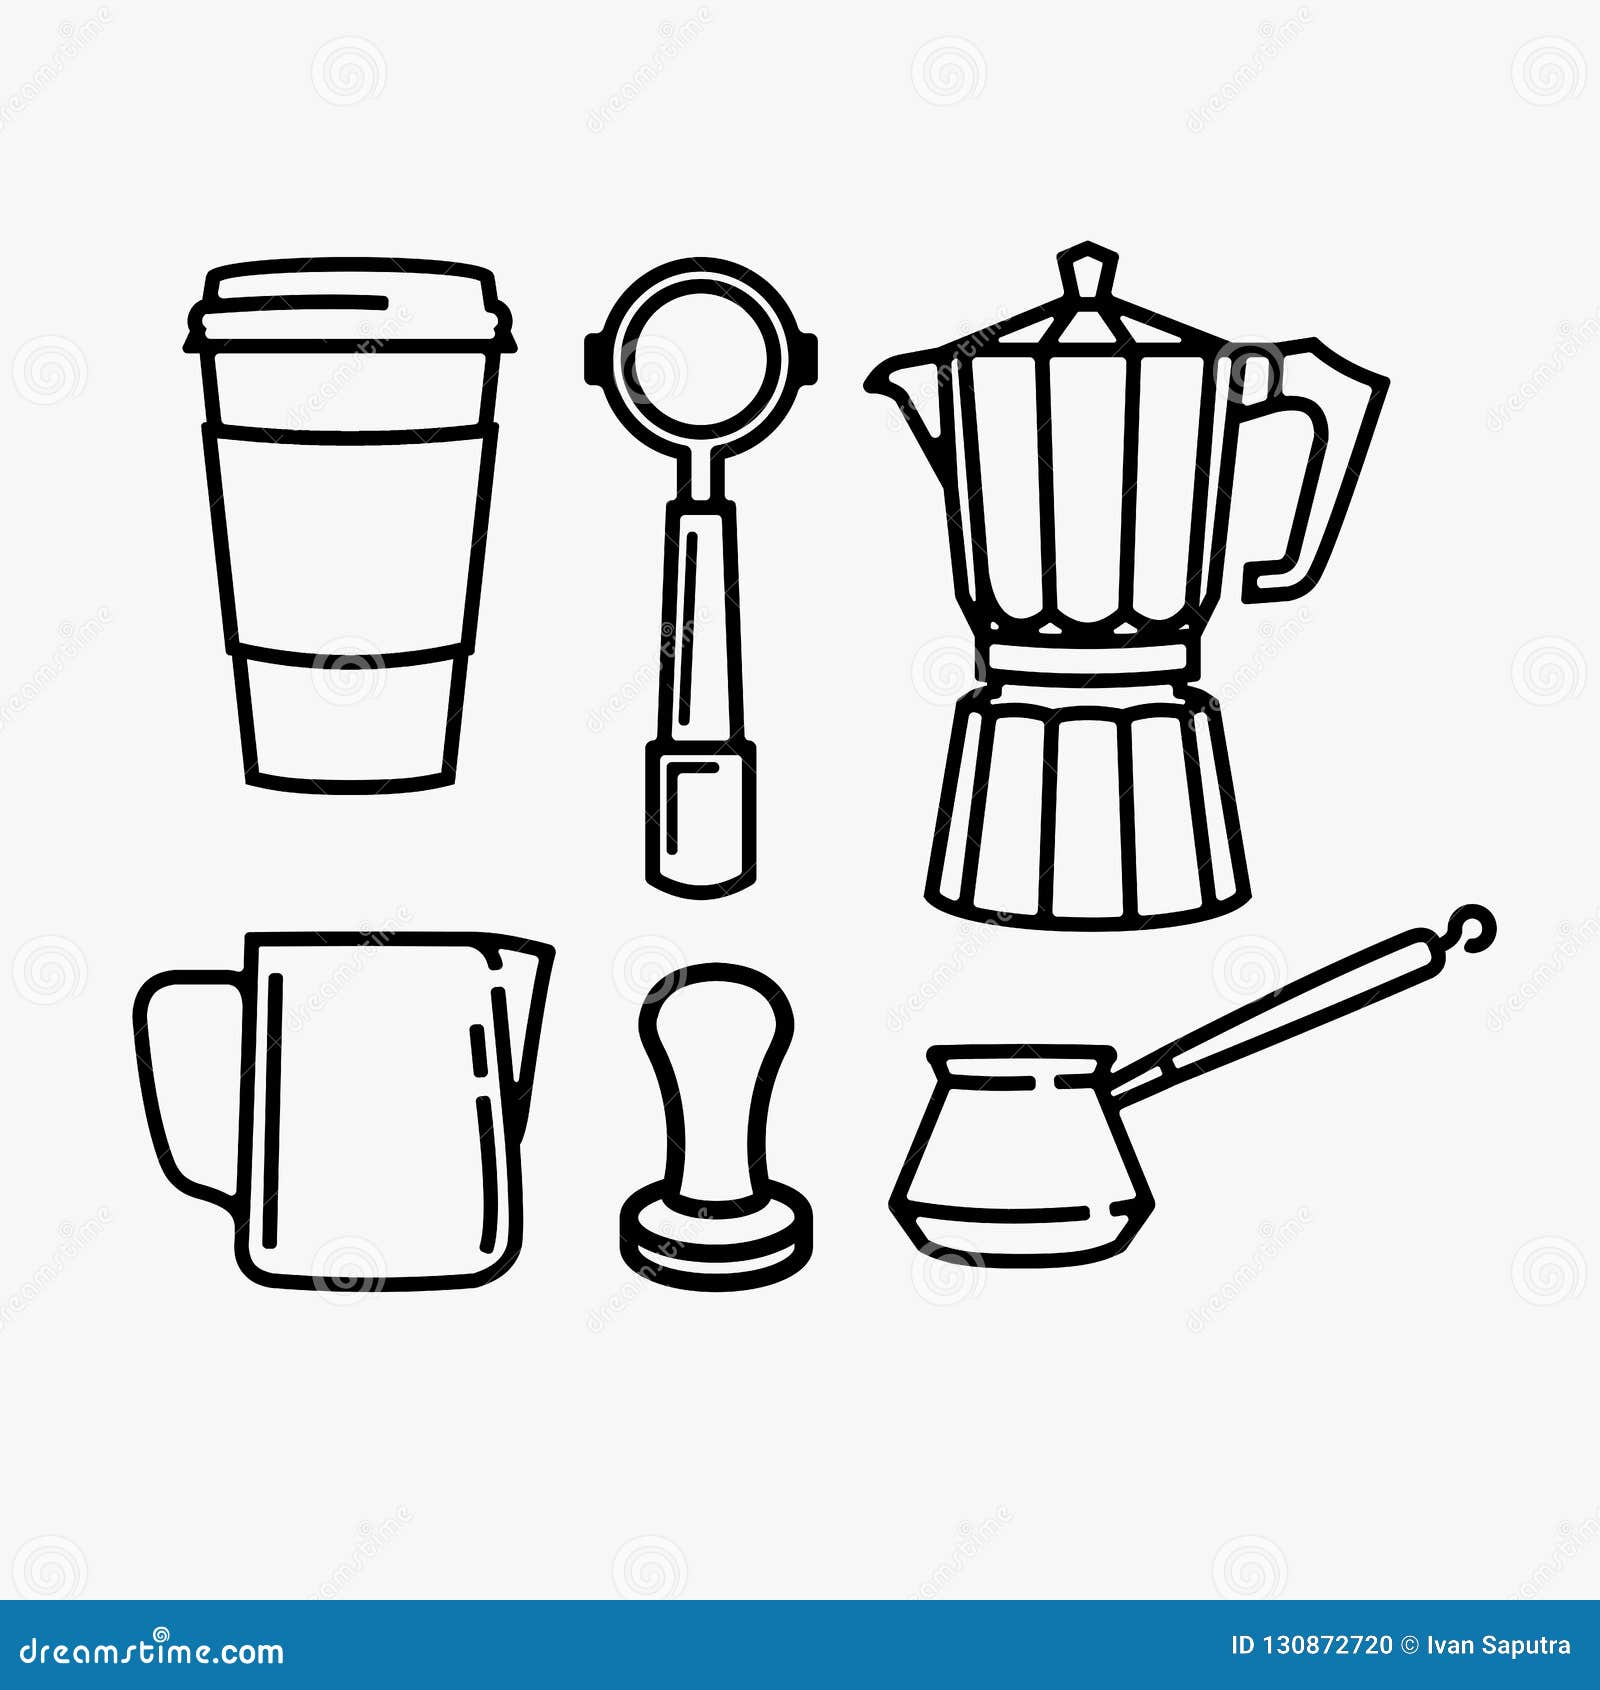 https://thumbs.dreamstime.com/z/coffee-equipment-vector-bundle-coffee-shop-logo-theme-inspiration-many-kinds-coffee-shope-equipment-tools-vector-collection-130872720.jpg